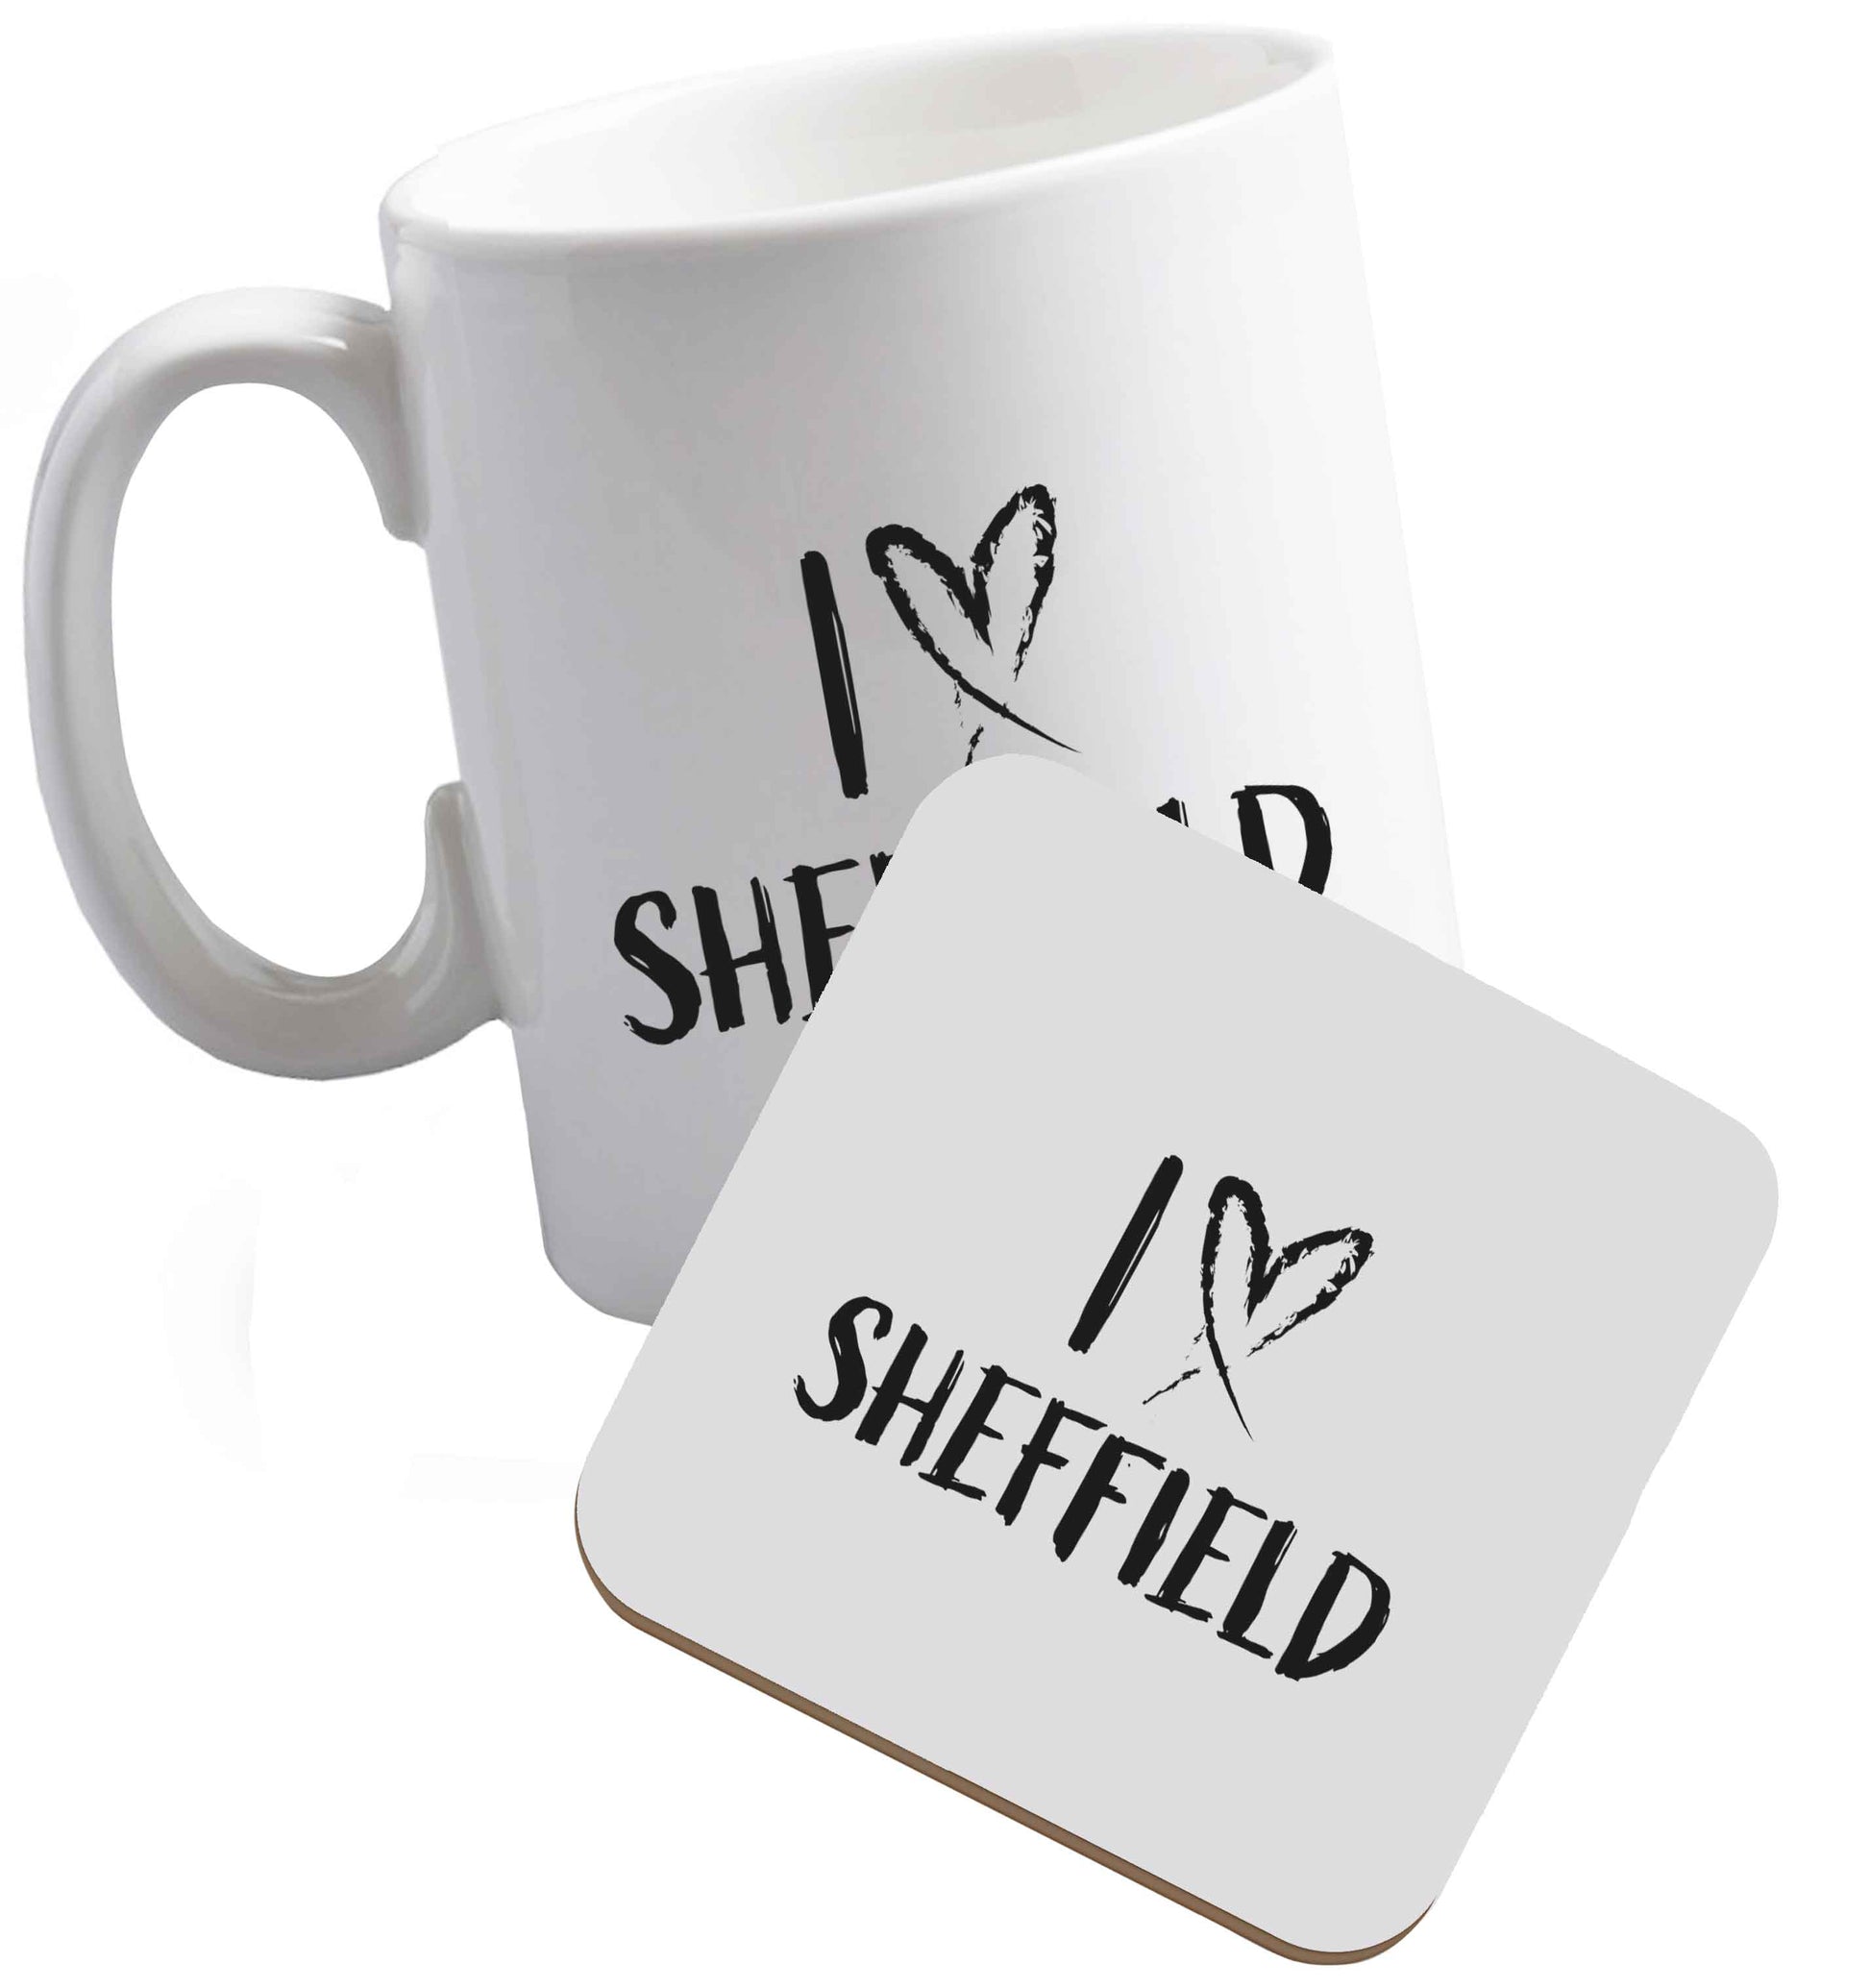 10 oz I love Sheffield ceramic mug and coaster set right handed